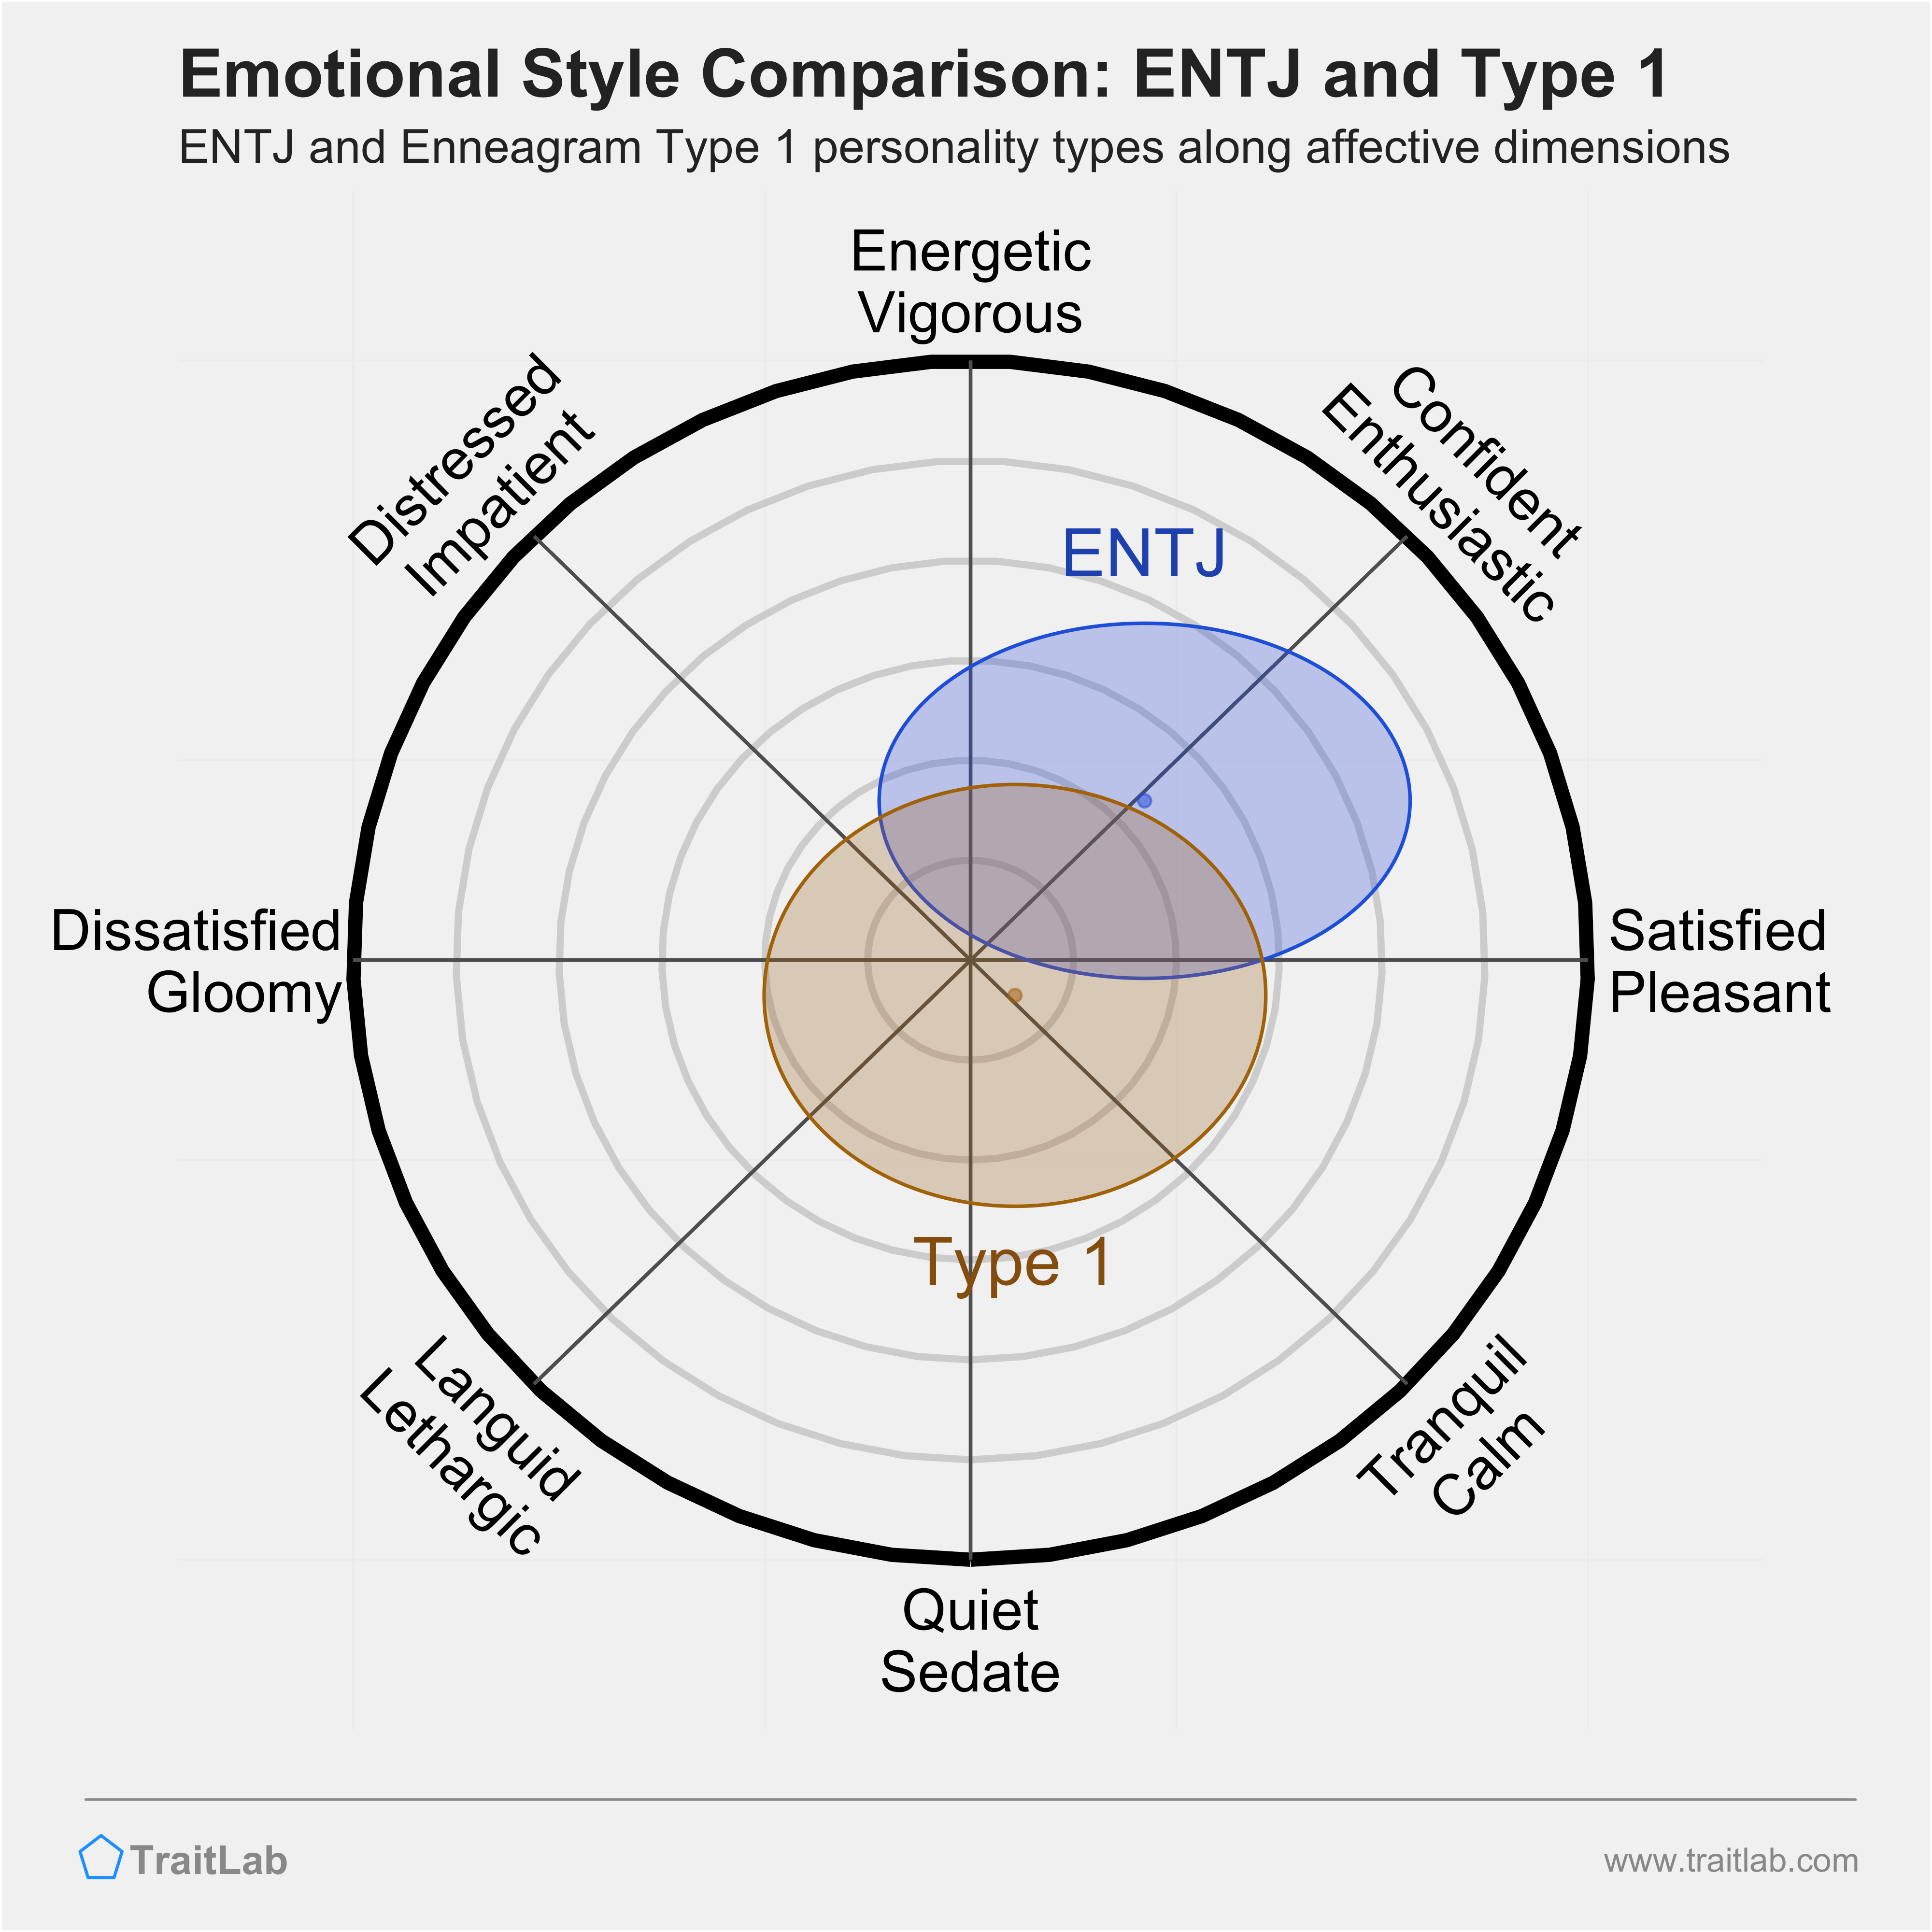 ENTJ and Type 1 comparison across emotional (affective) dimensions